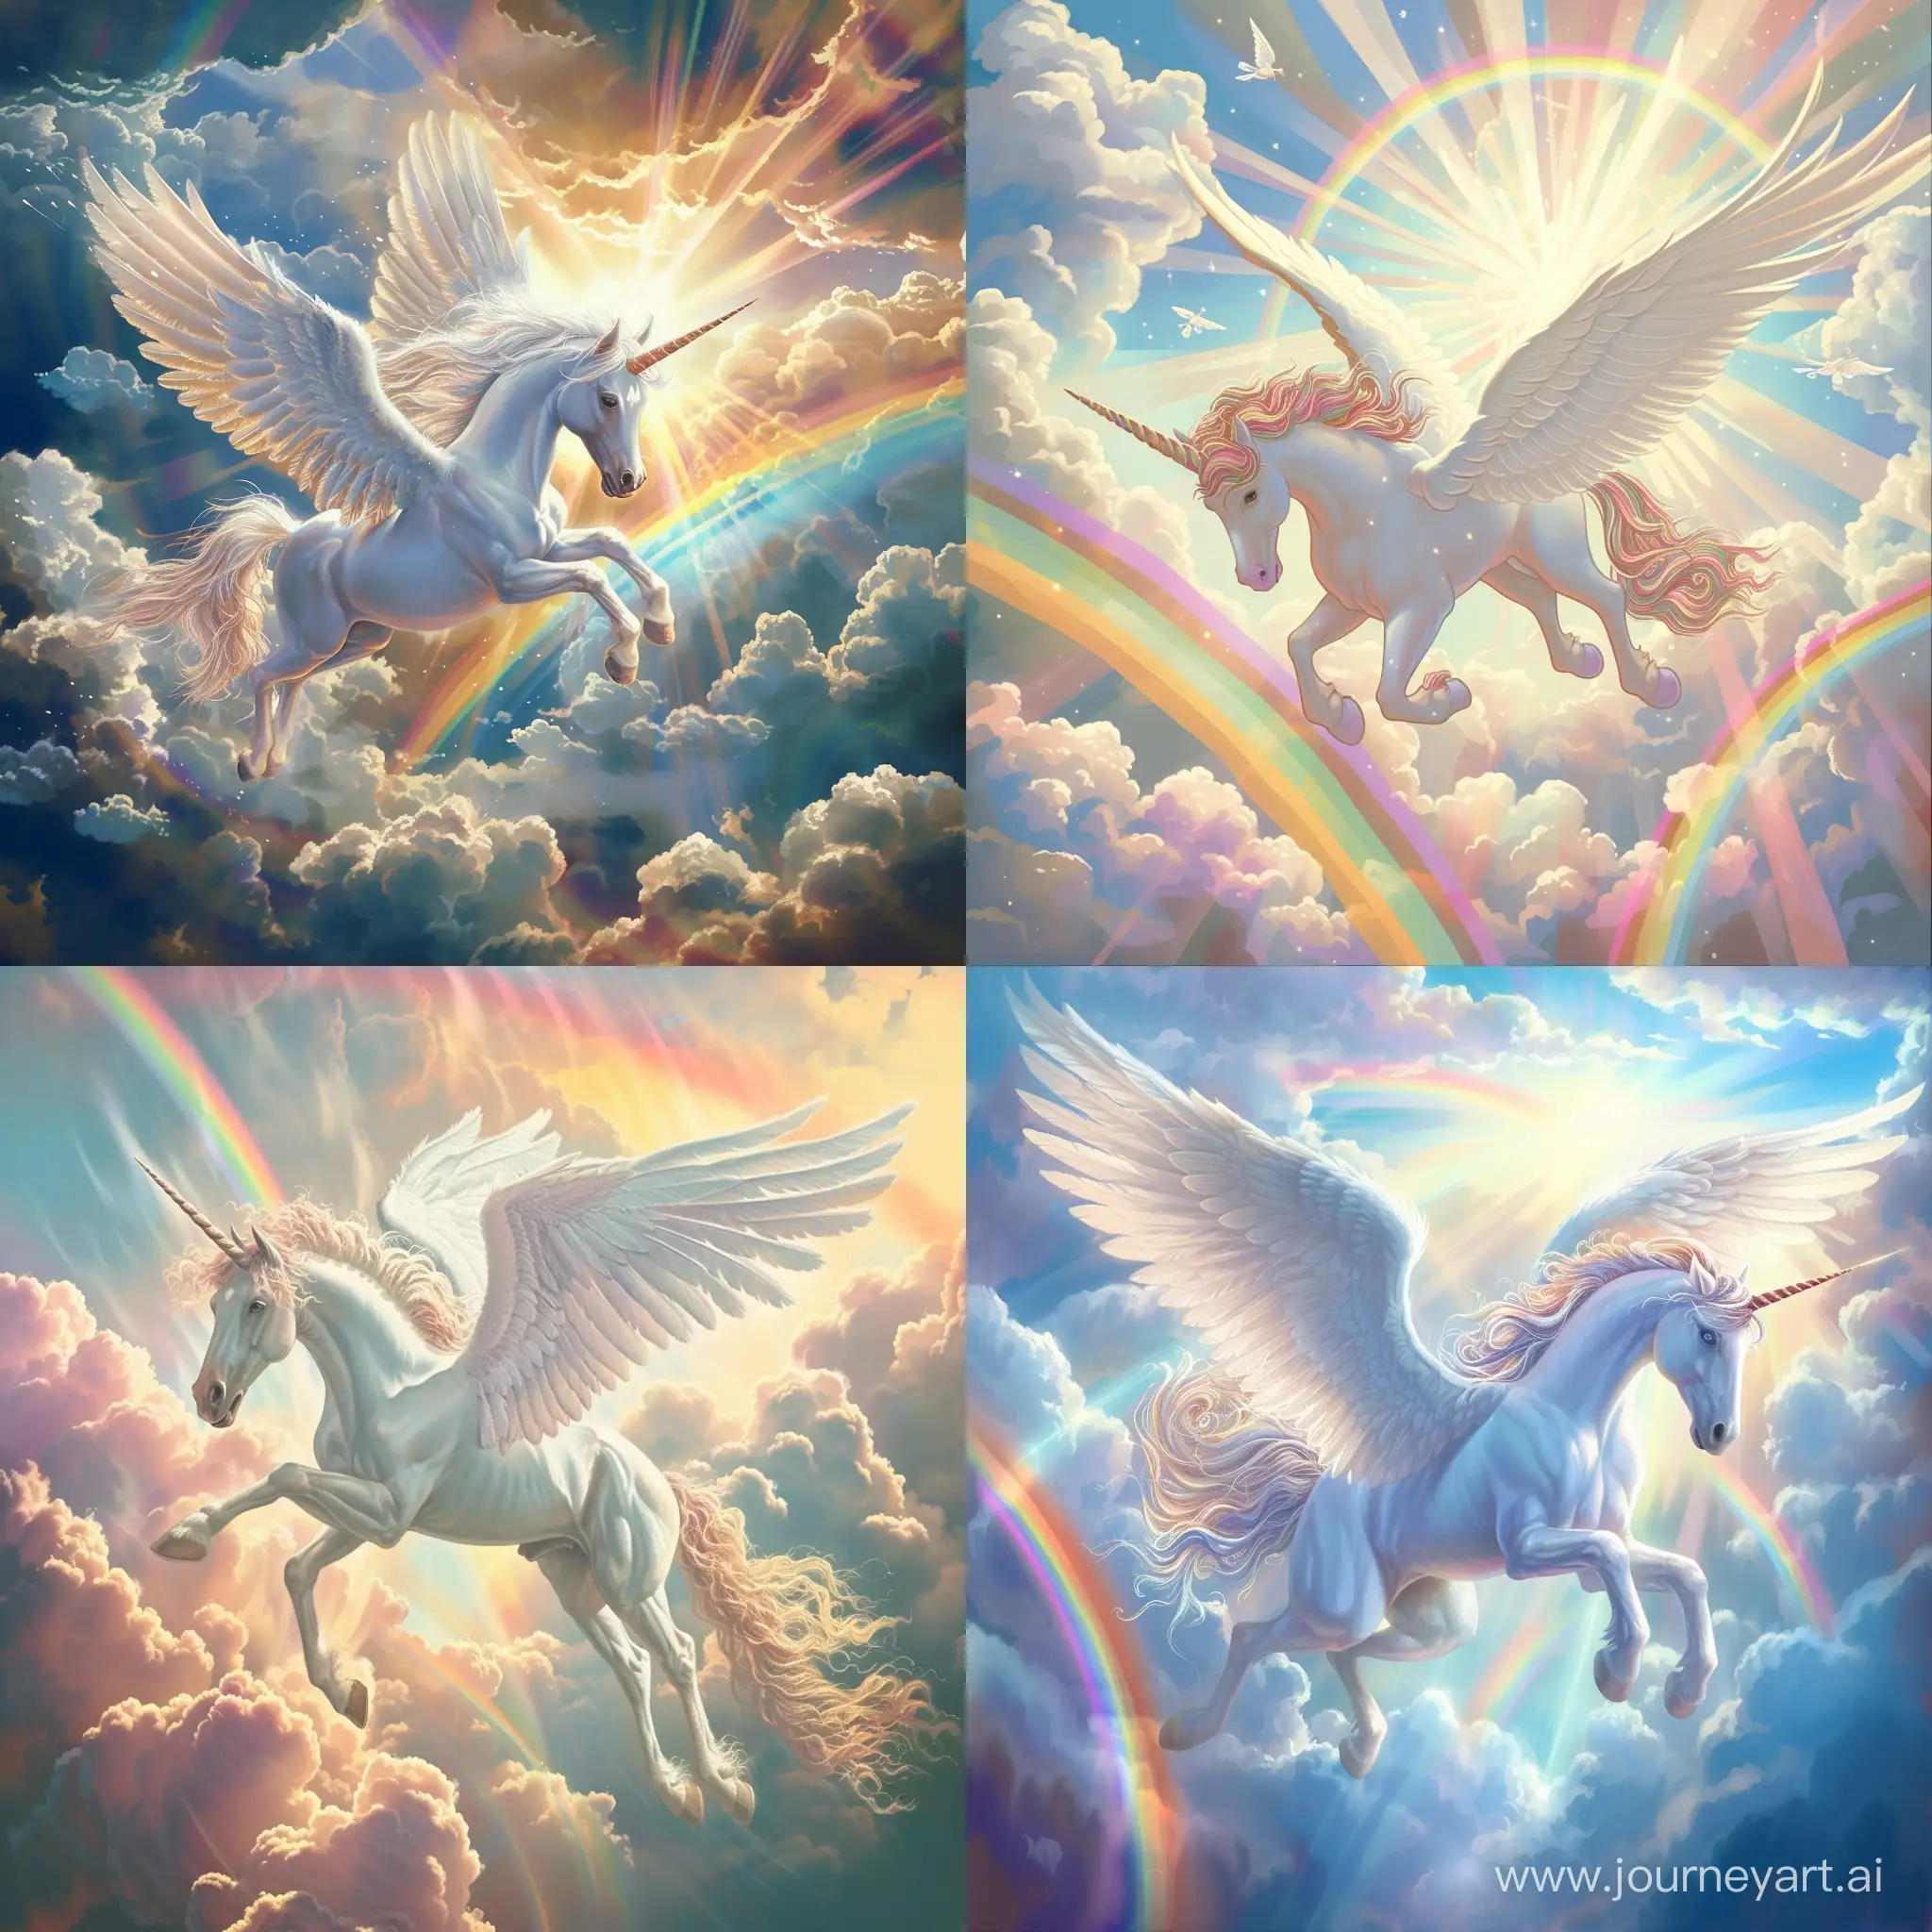 Majestic-Pegasus-Soaring-through-Radiant-Skies-with-Rainbows